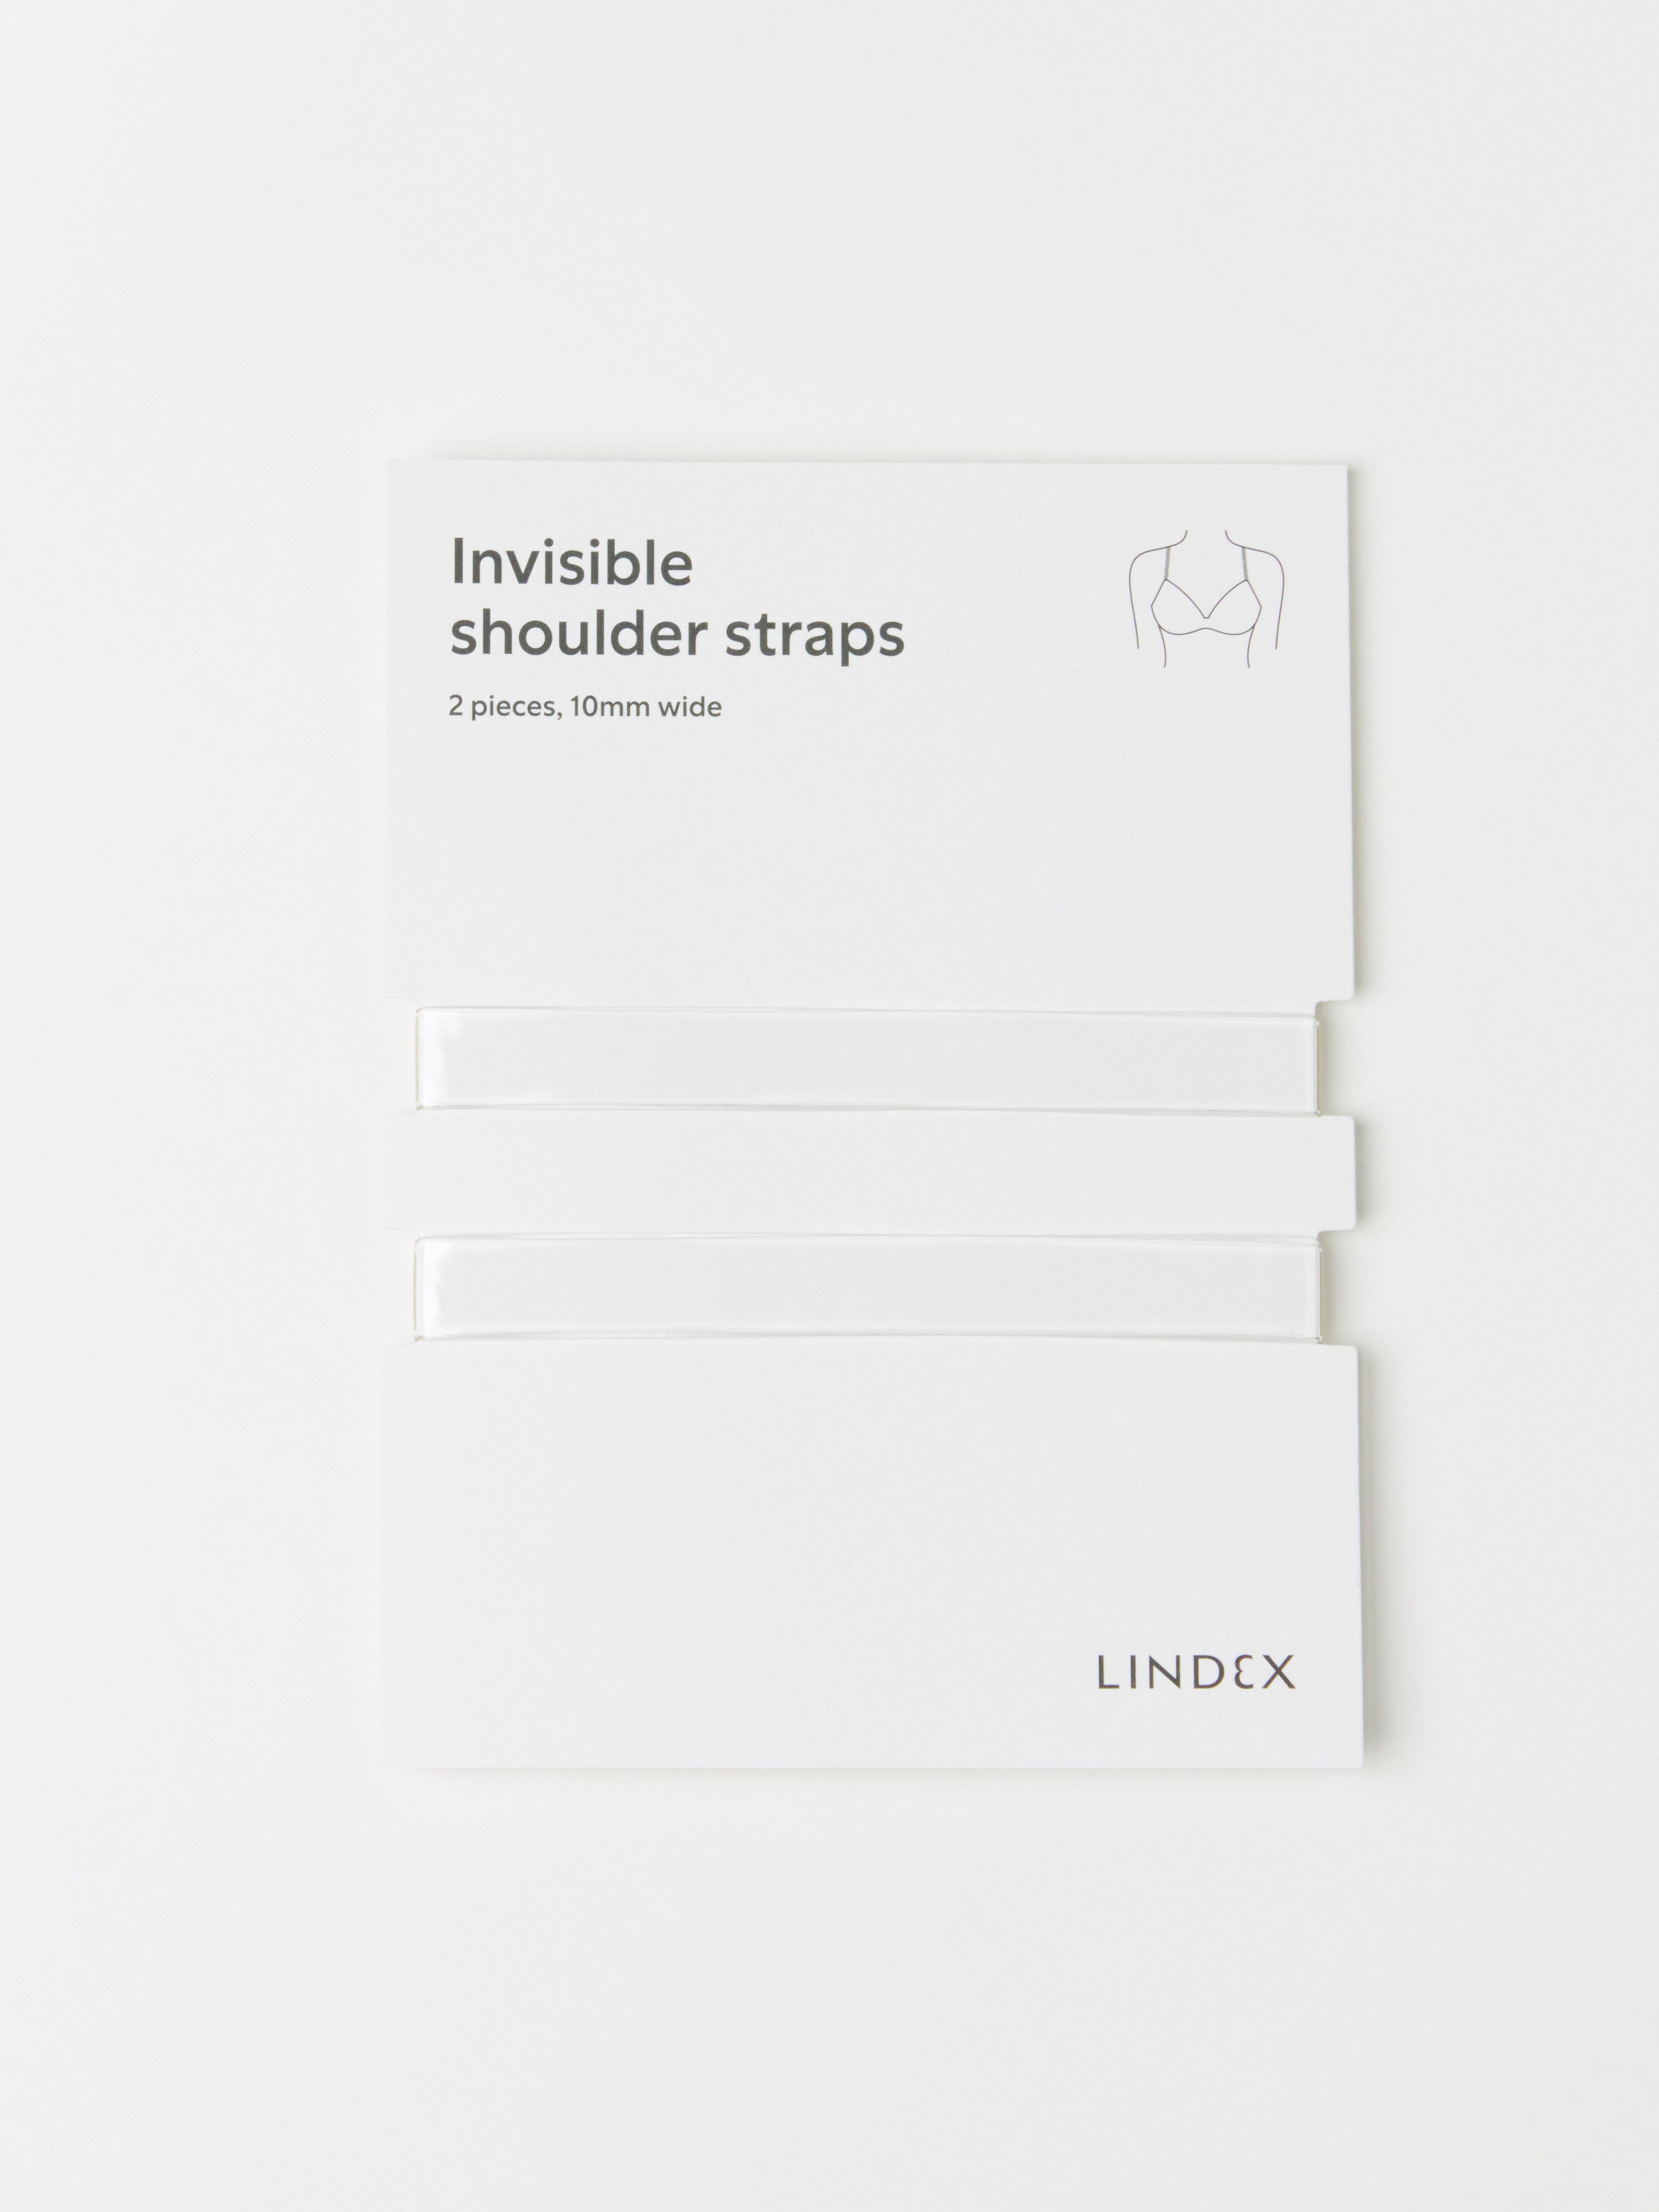 Fashion Tape  Lindex Lithuania